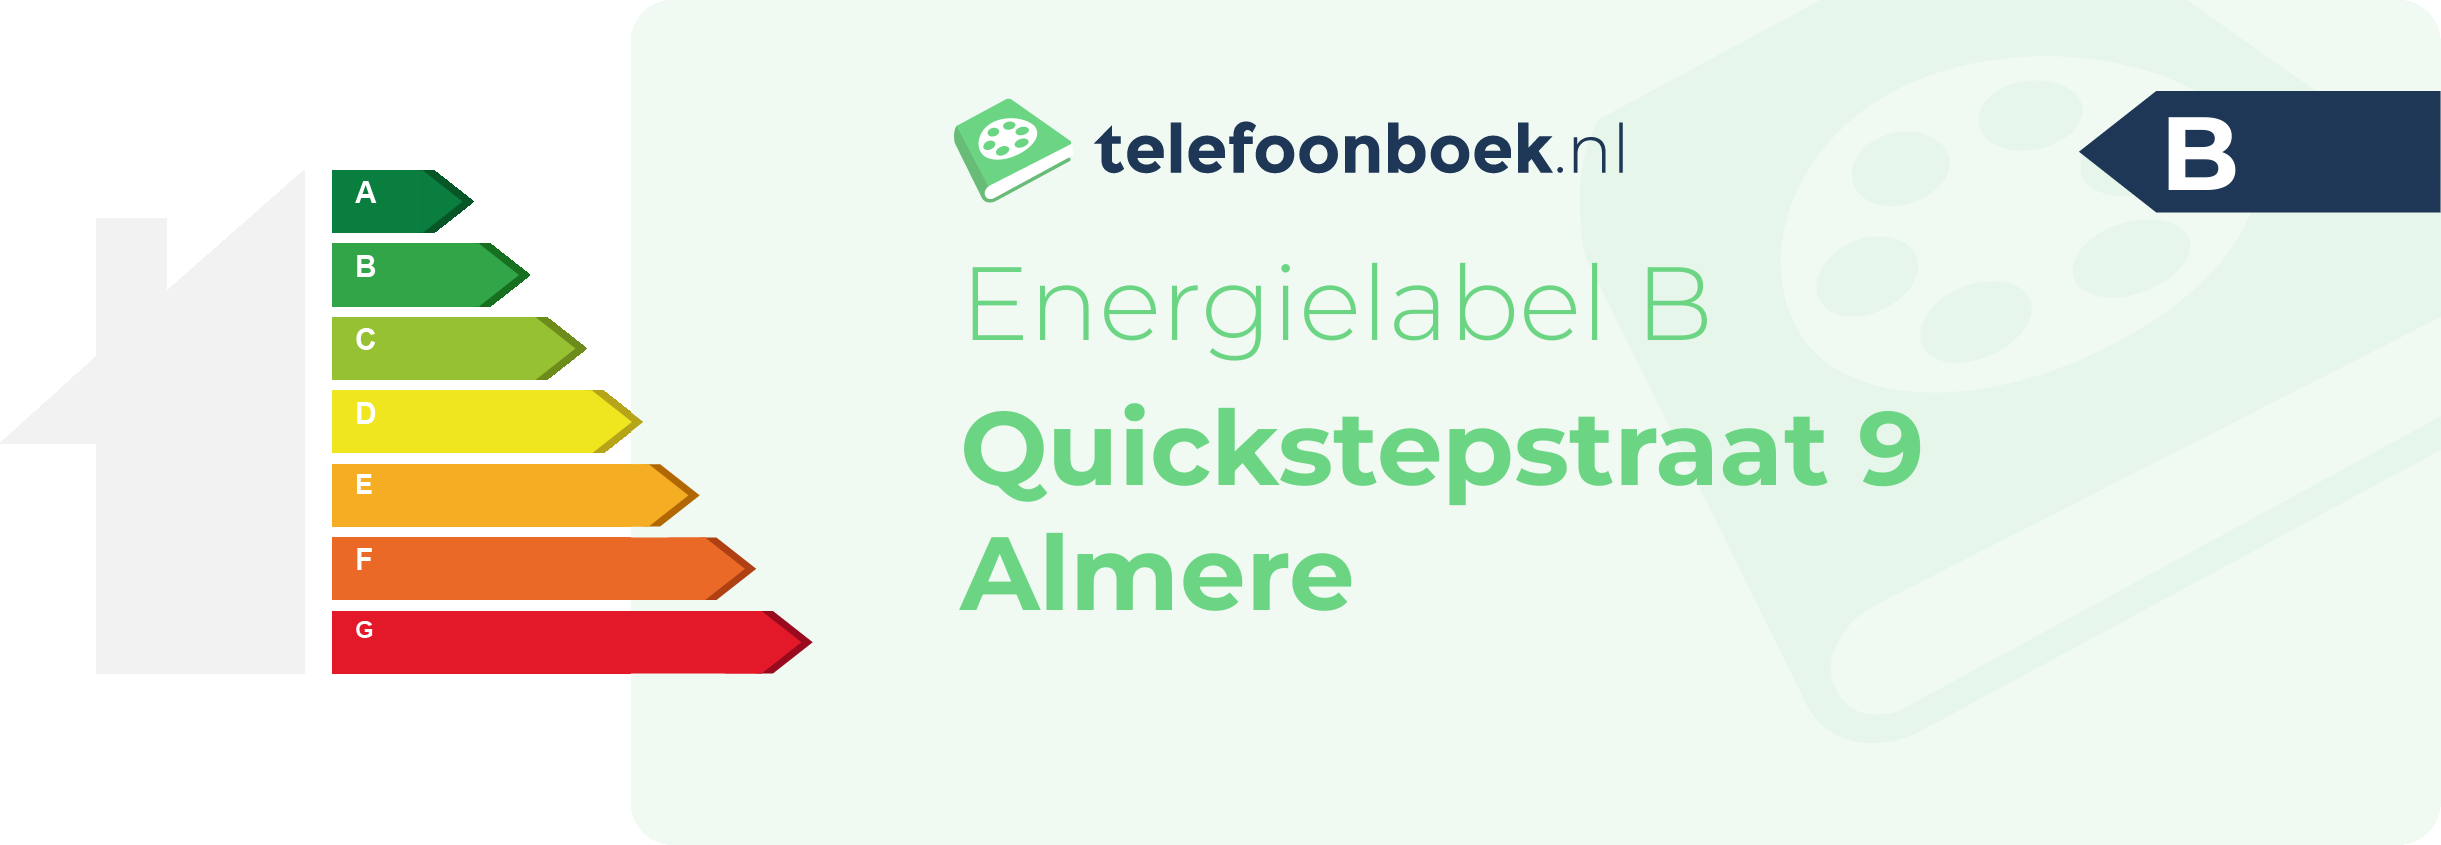 Energielabel Quickstepstraat 9 Almere